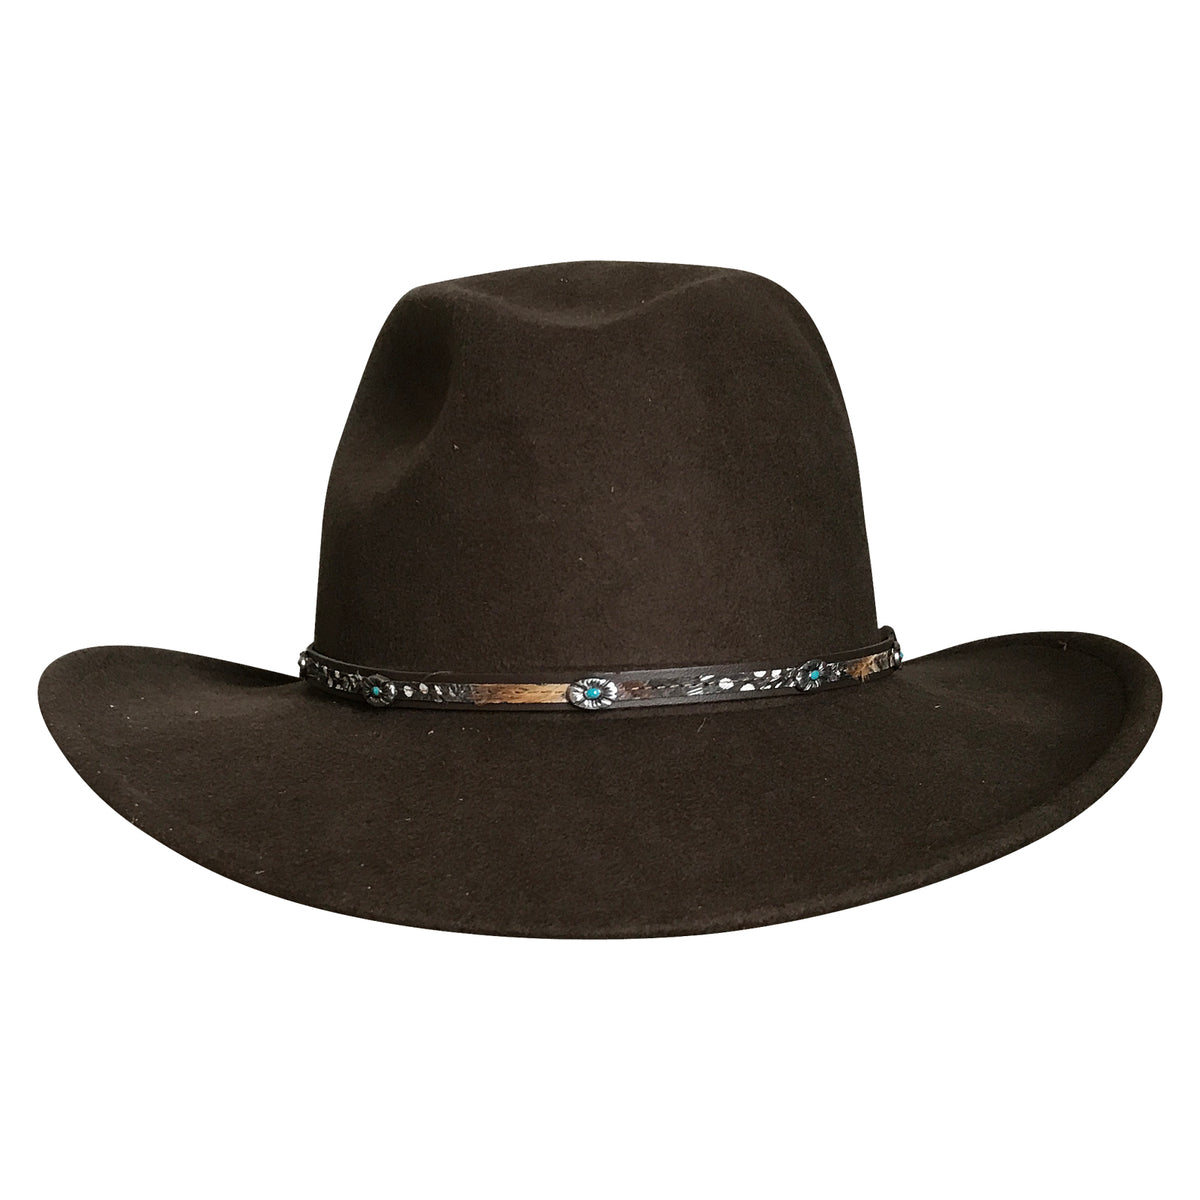 Crushable Brown Felt Denver Western Cowboy Hat - Rockmount